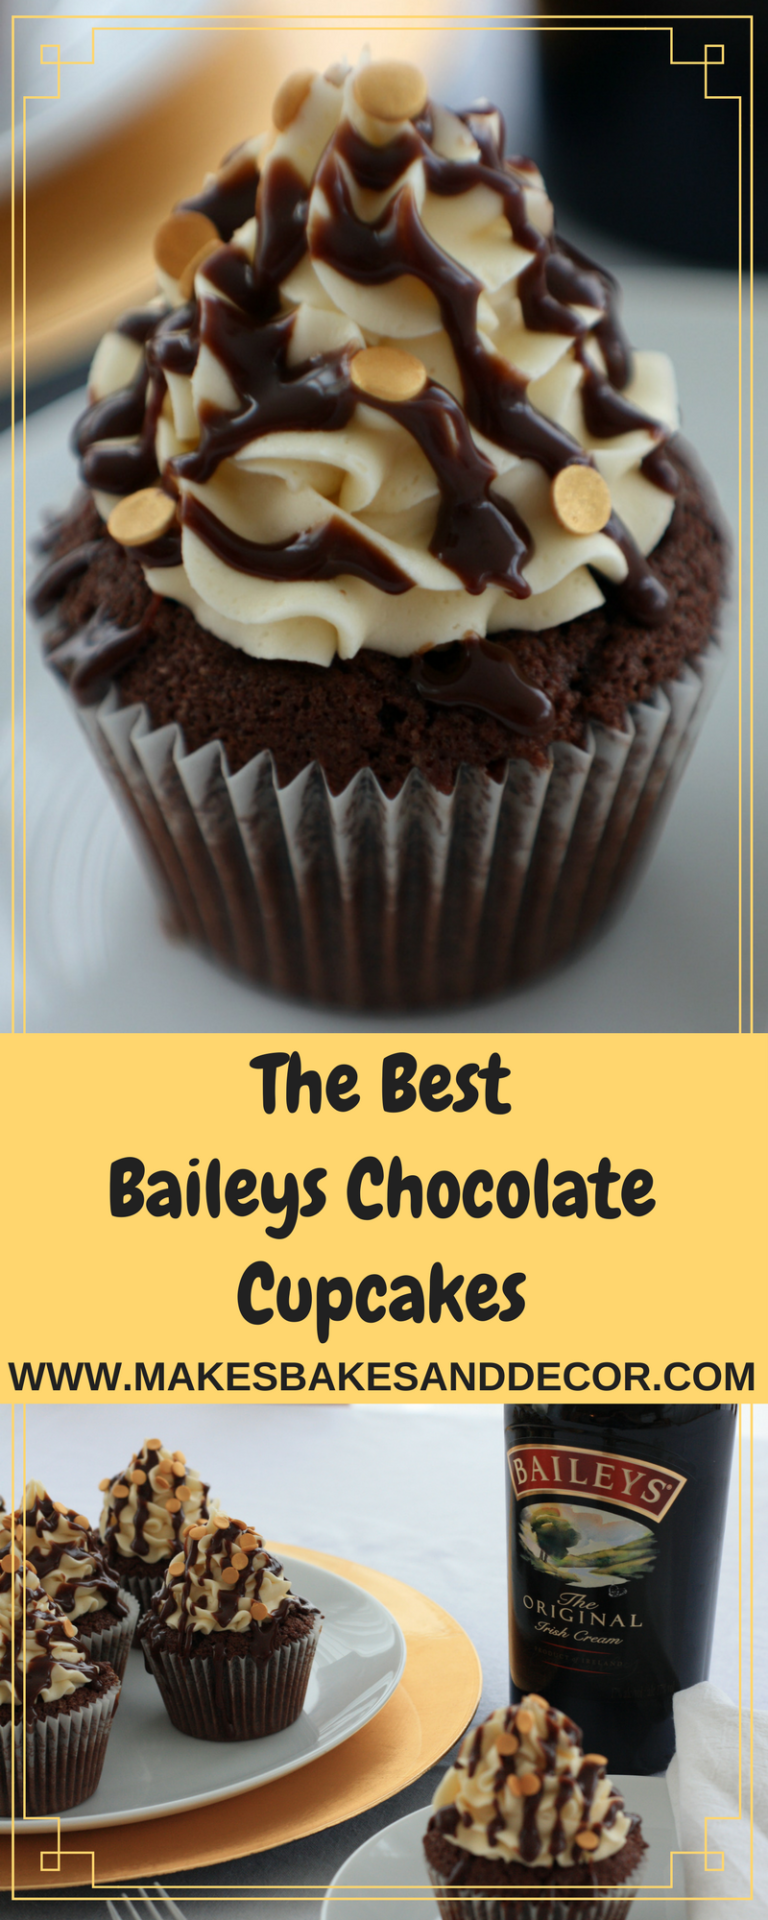 Baileys chocolate cupcakes - Makes, Bakes and Decor